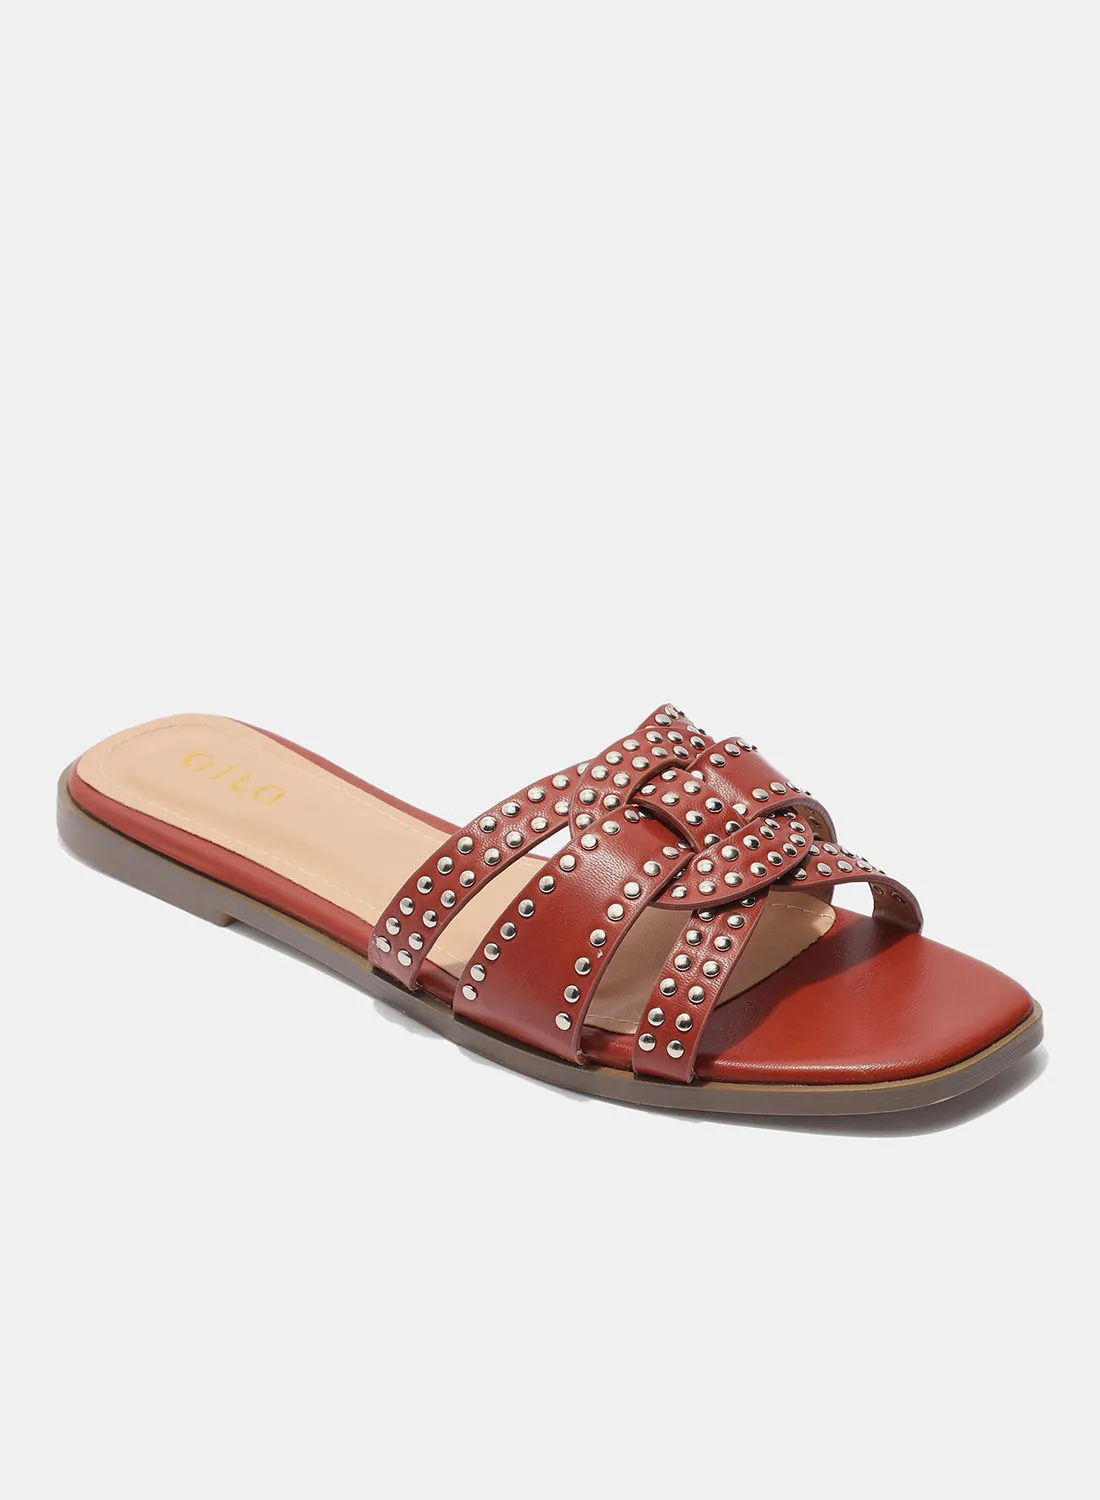 Aila Fashionable Casual Flat Sandals Tan/Silver